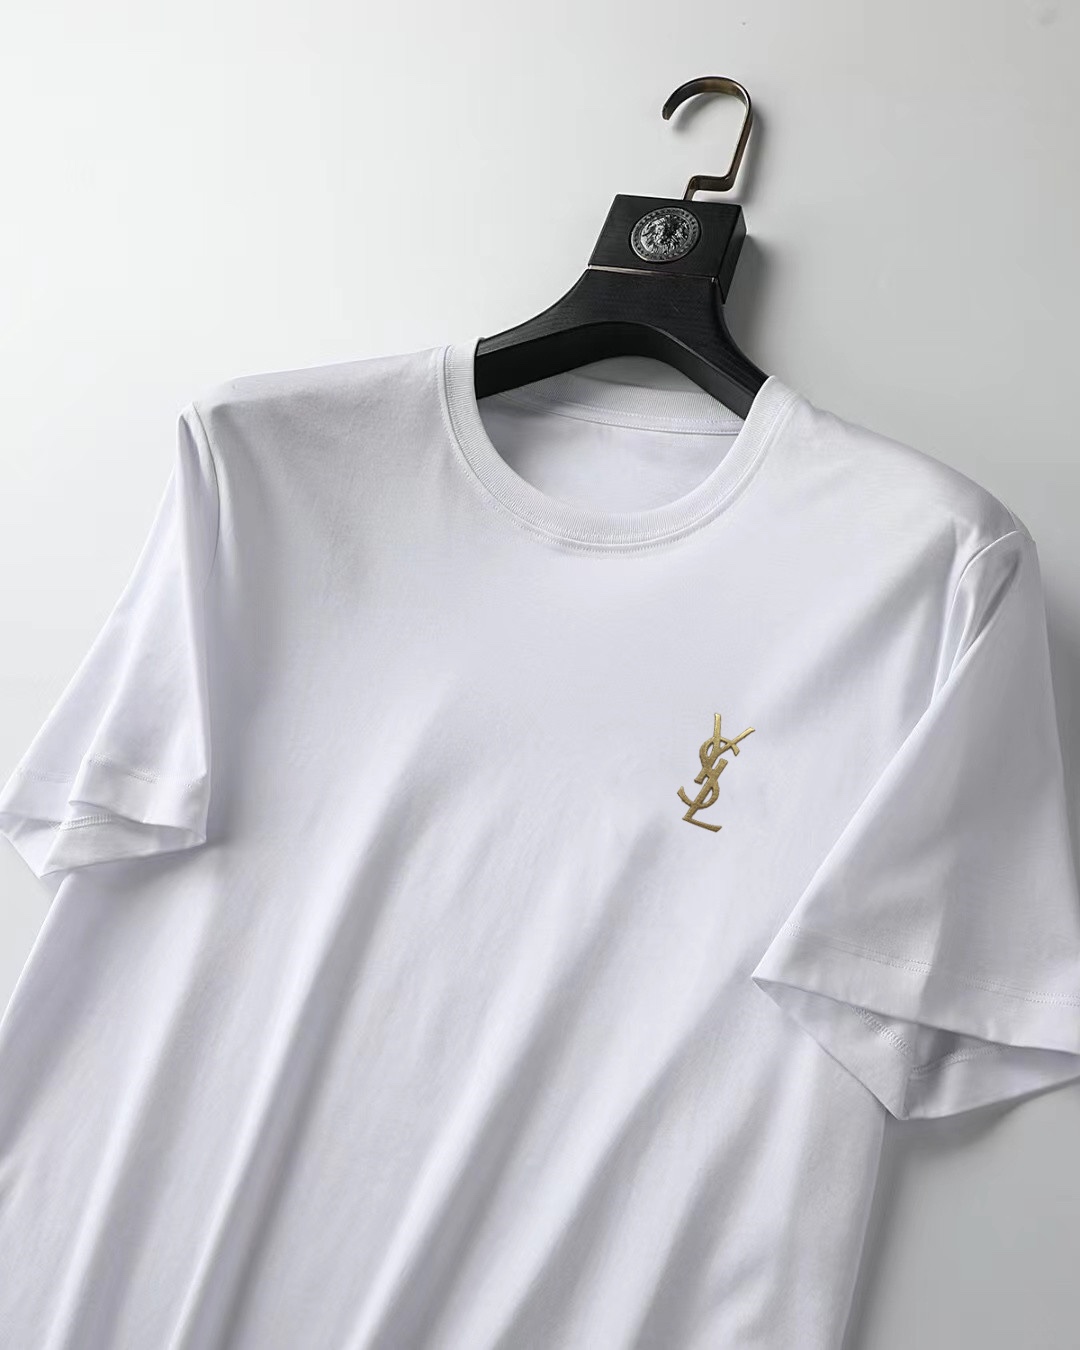 Yves Saint Laurent #38536 Fashionable T-Shirts - yvessaintlaurent.to